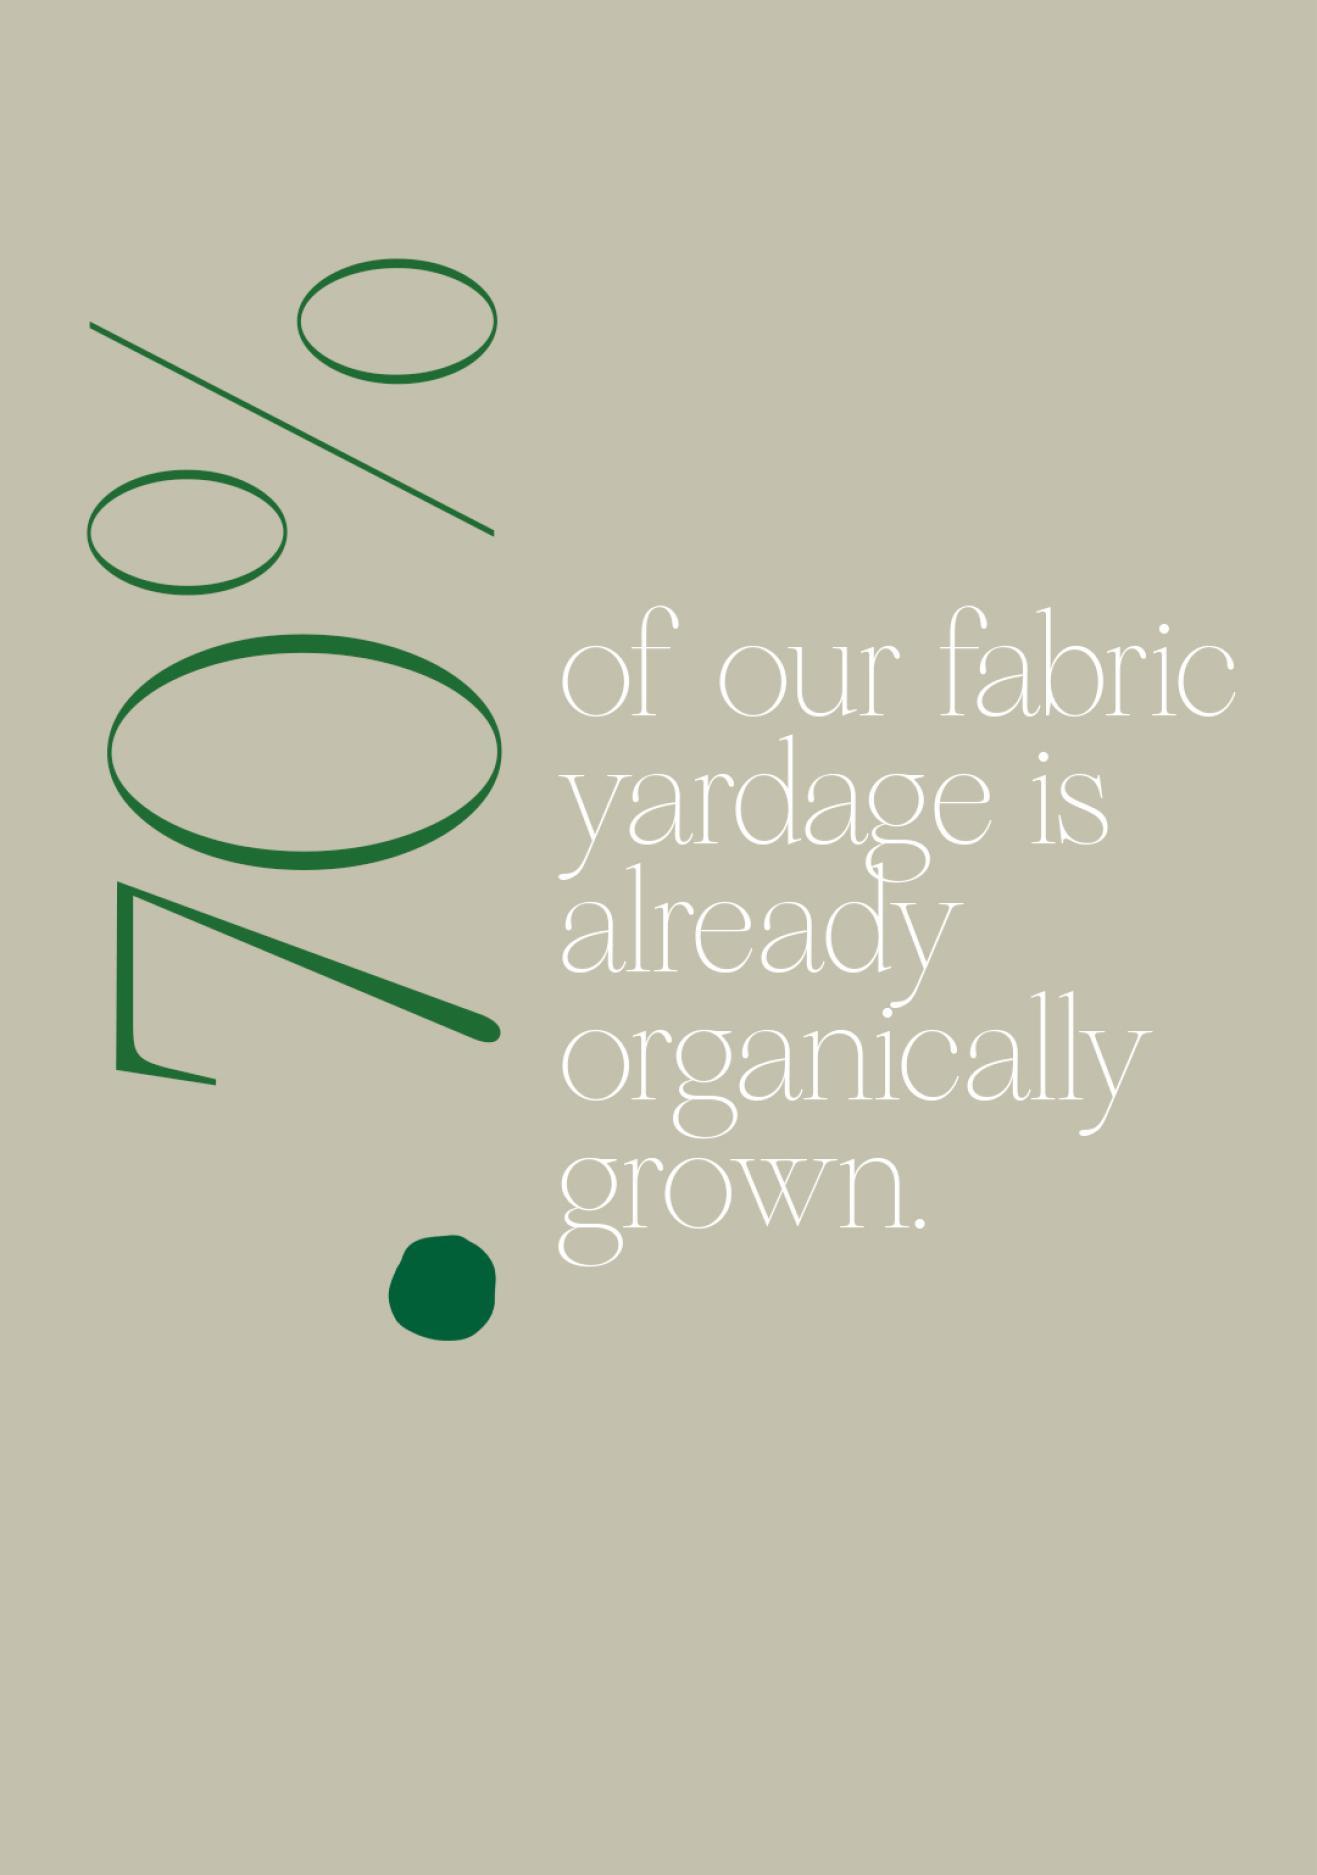 Organically grown fabrics